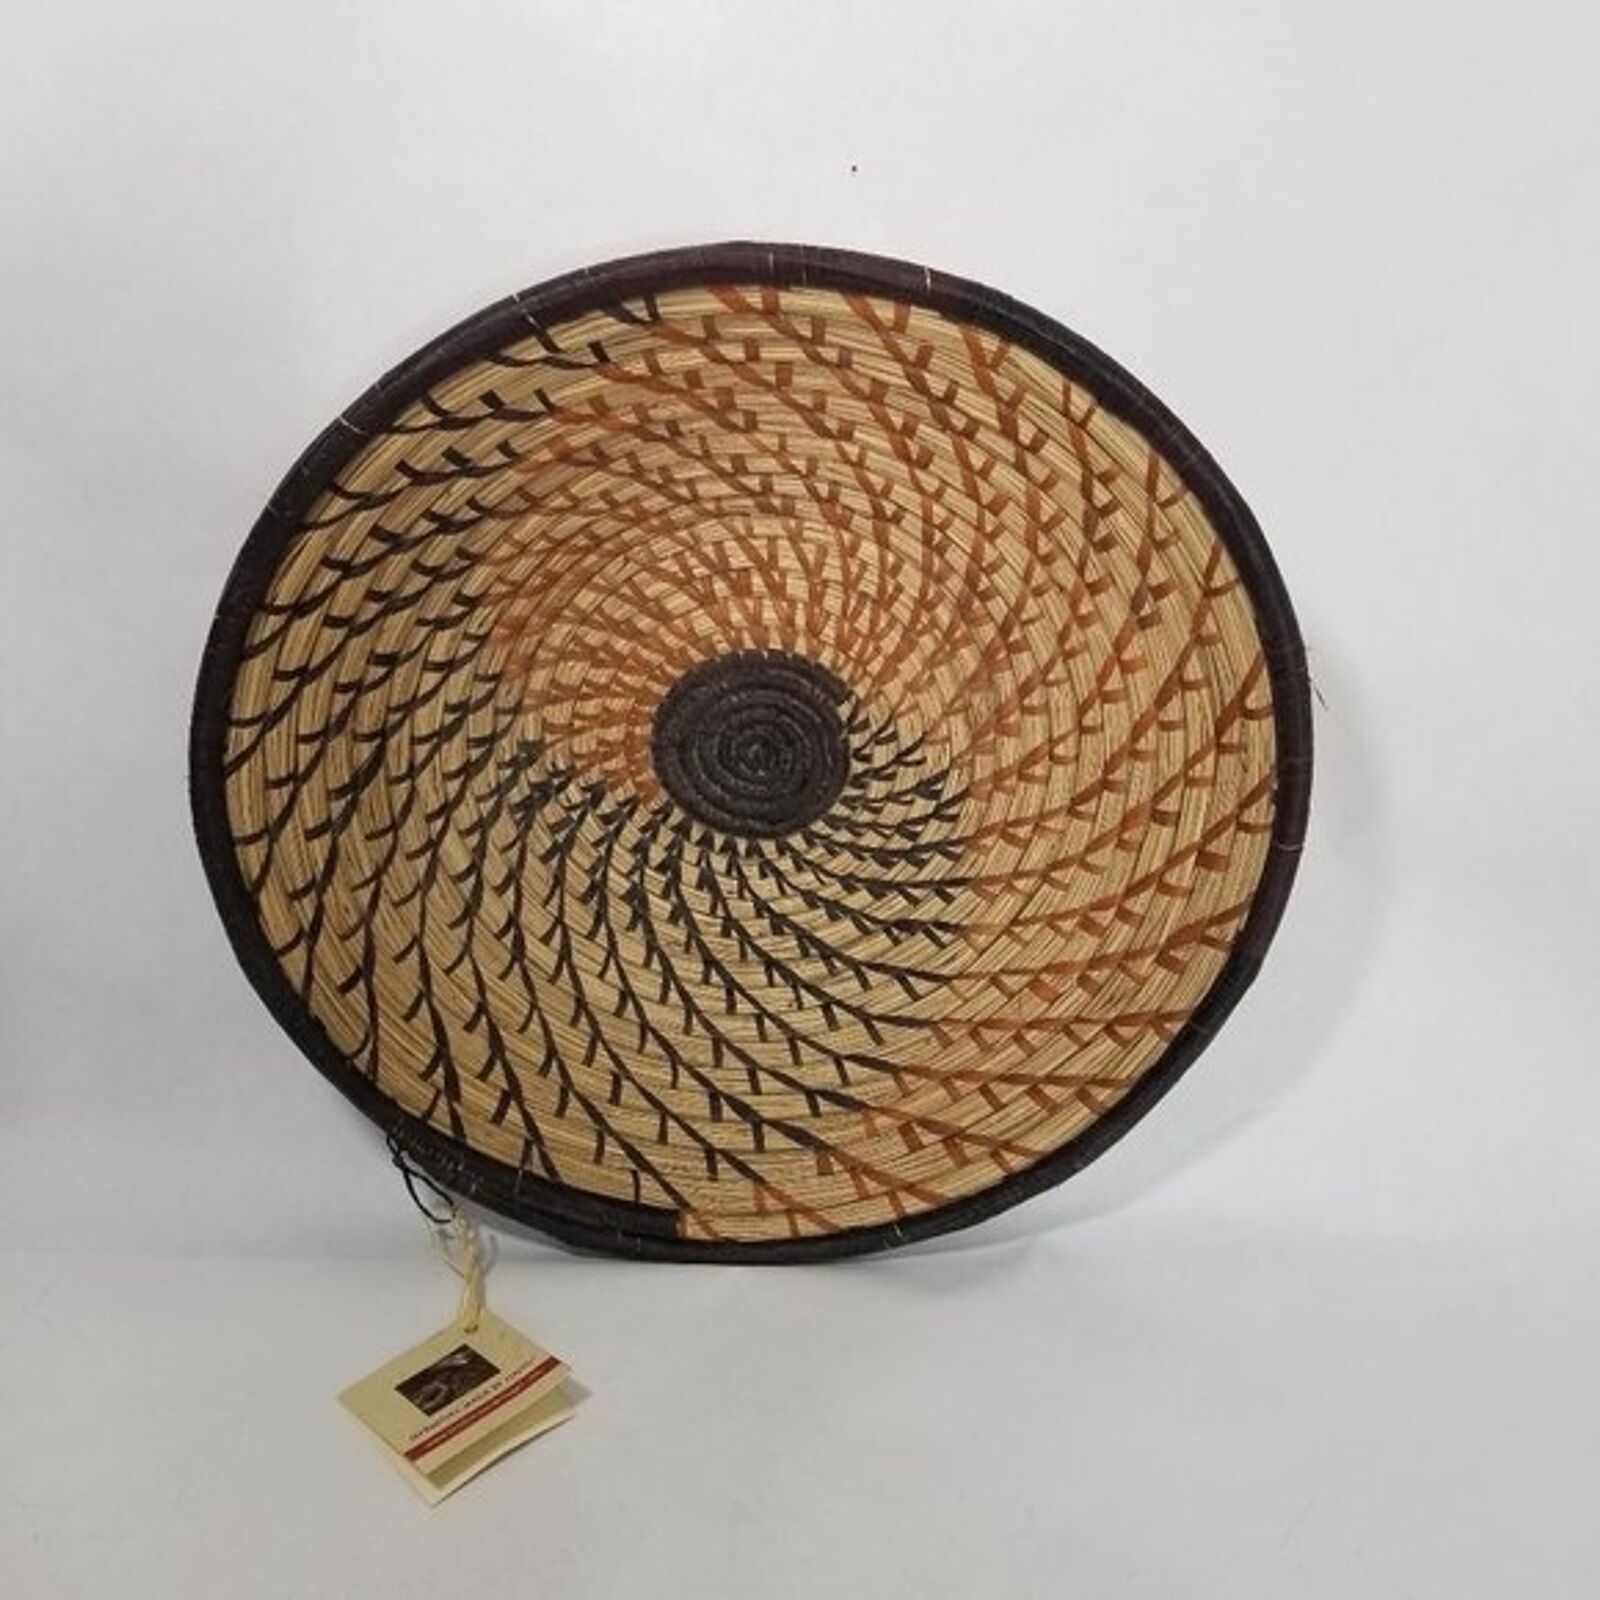 NEW Ten Thousand Villages Handcrafted Raffia Wicker Rattan Basket Size 13x13 NEW